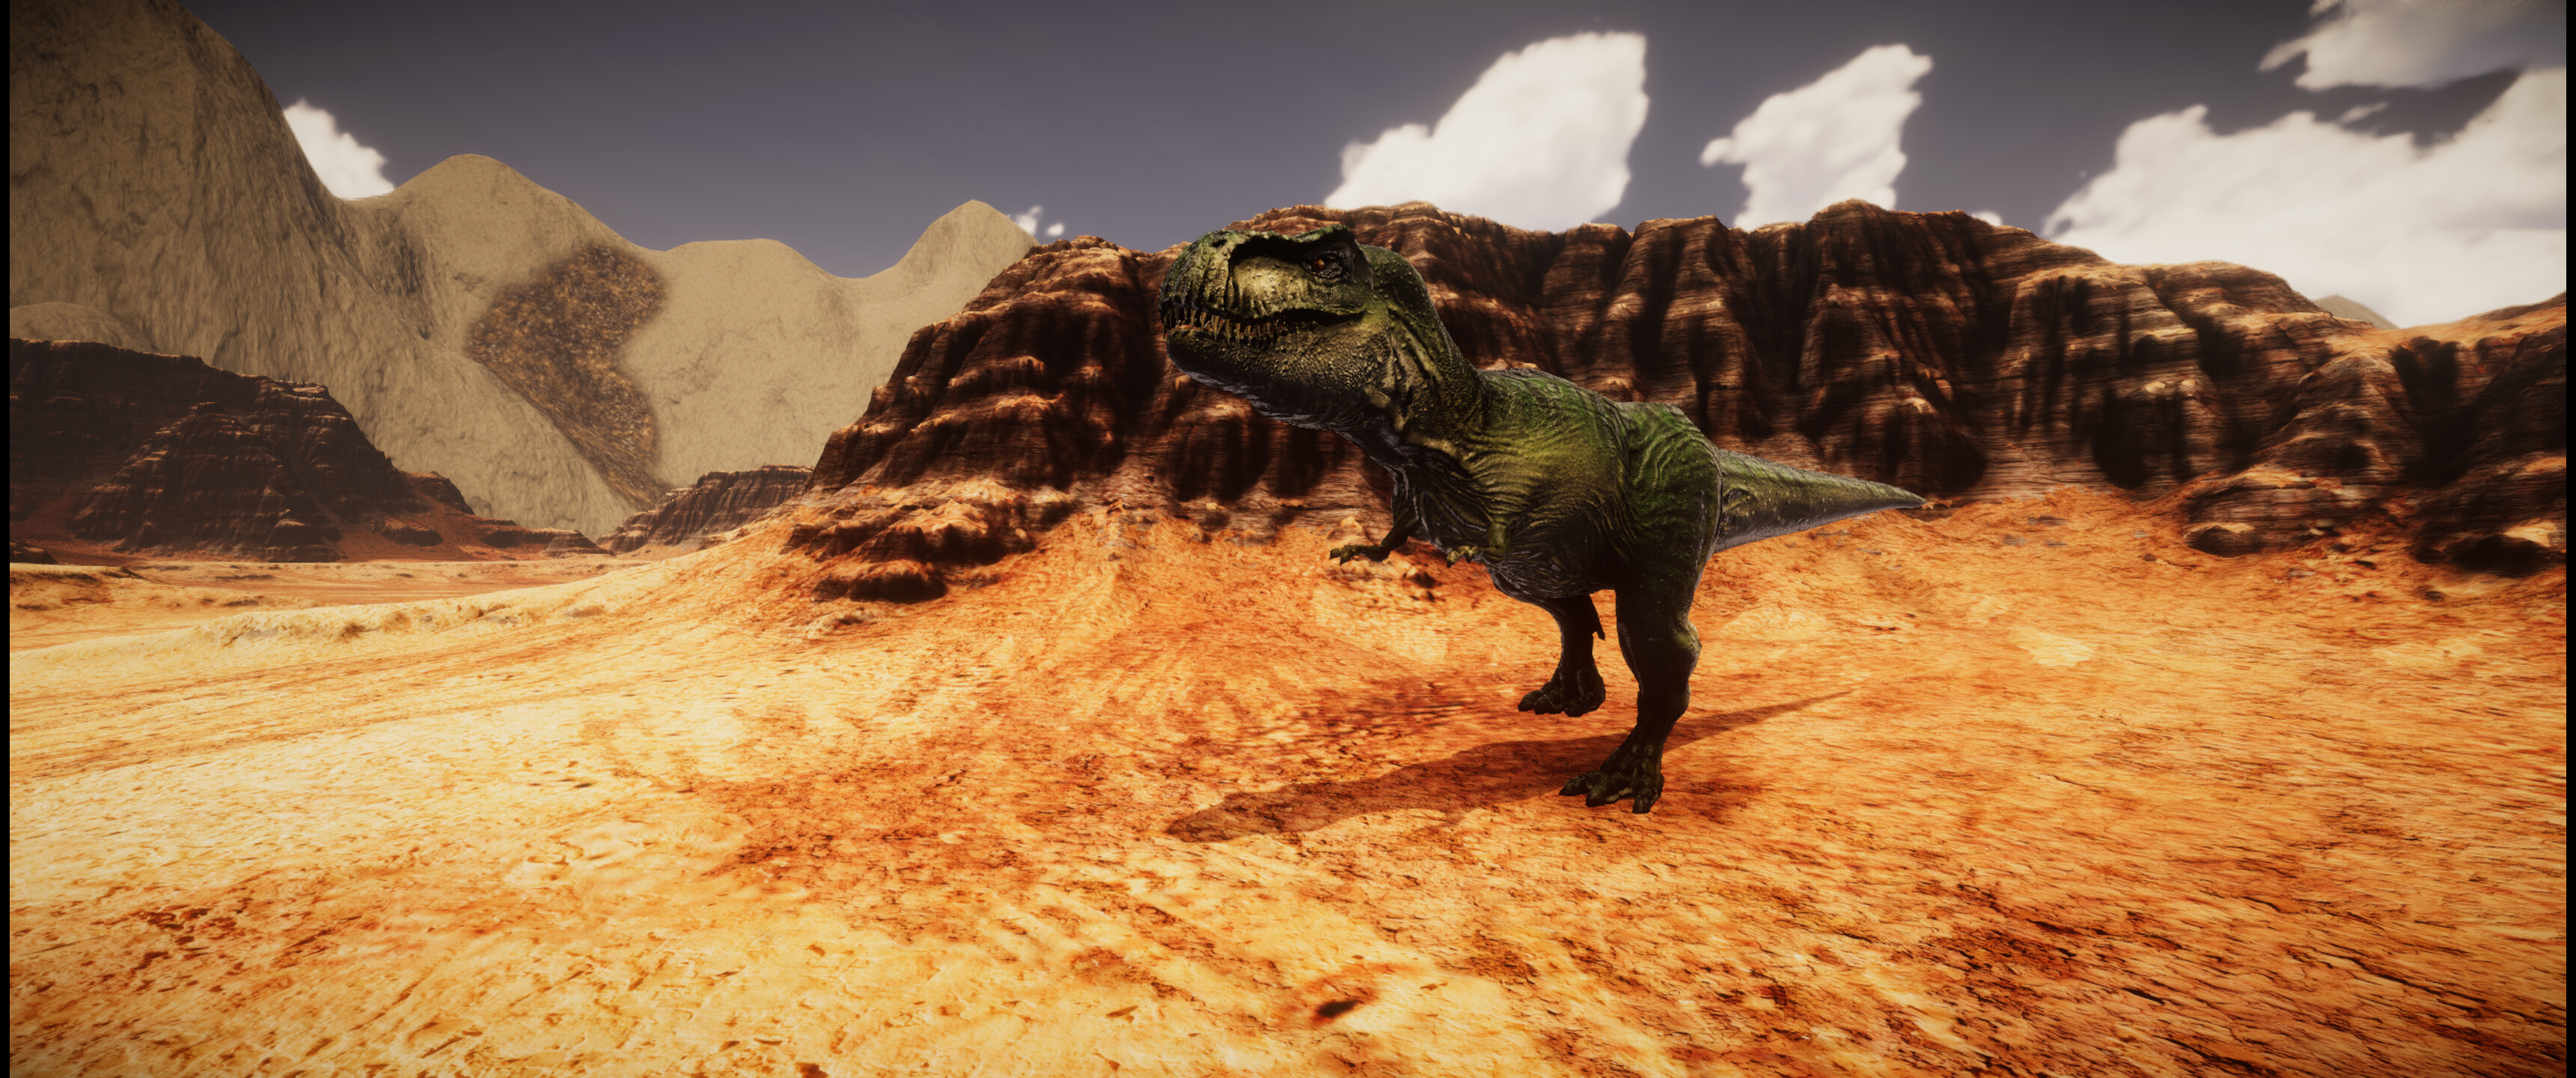 Dinosaur Simulator Free Download for PC